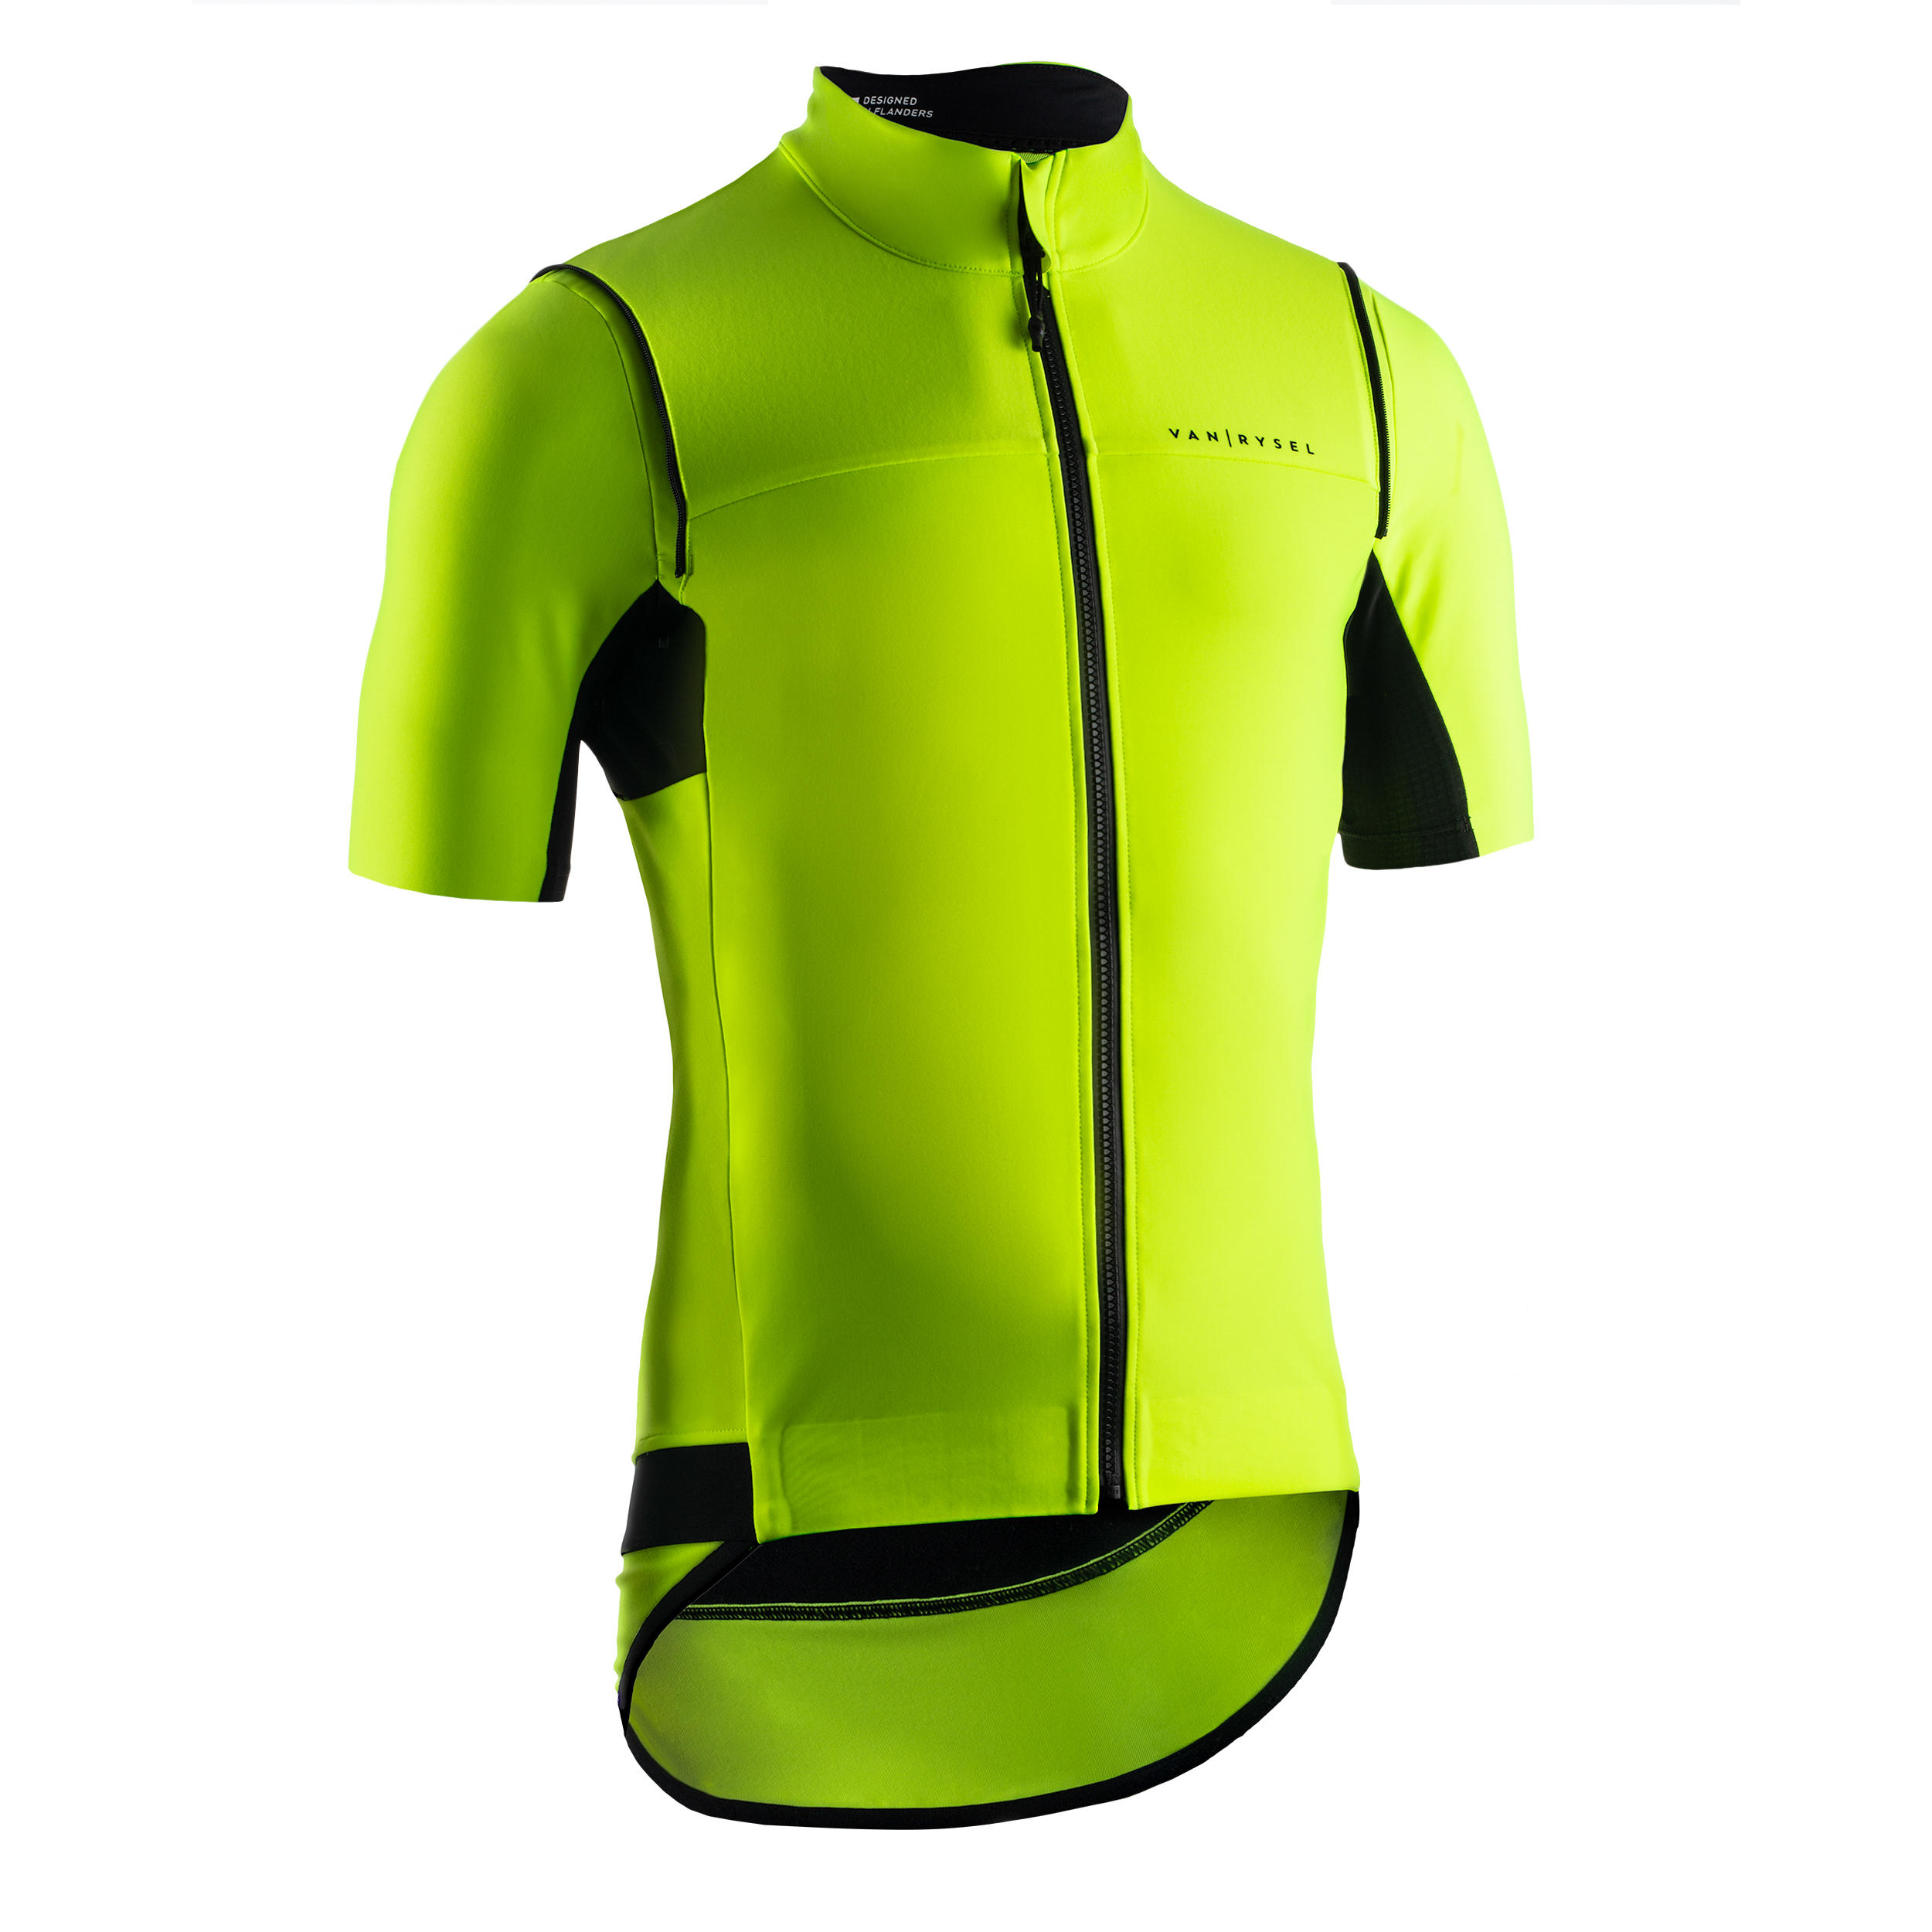 Men's Long-Sleeved Road Cycling Showerproof Convertible Jacket Racer - Yellow 2/11